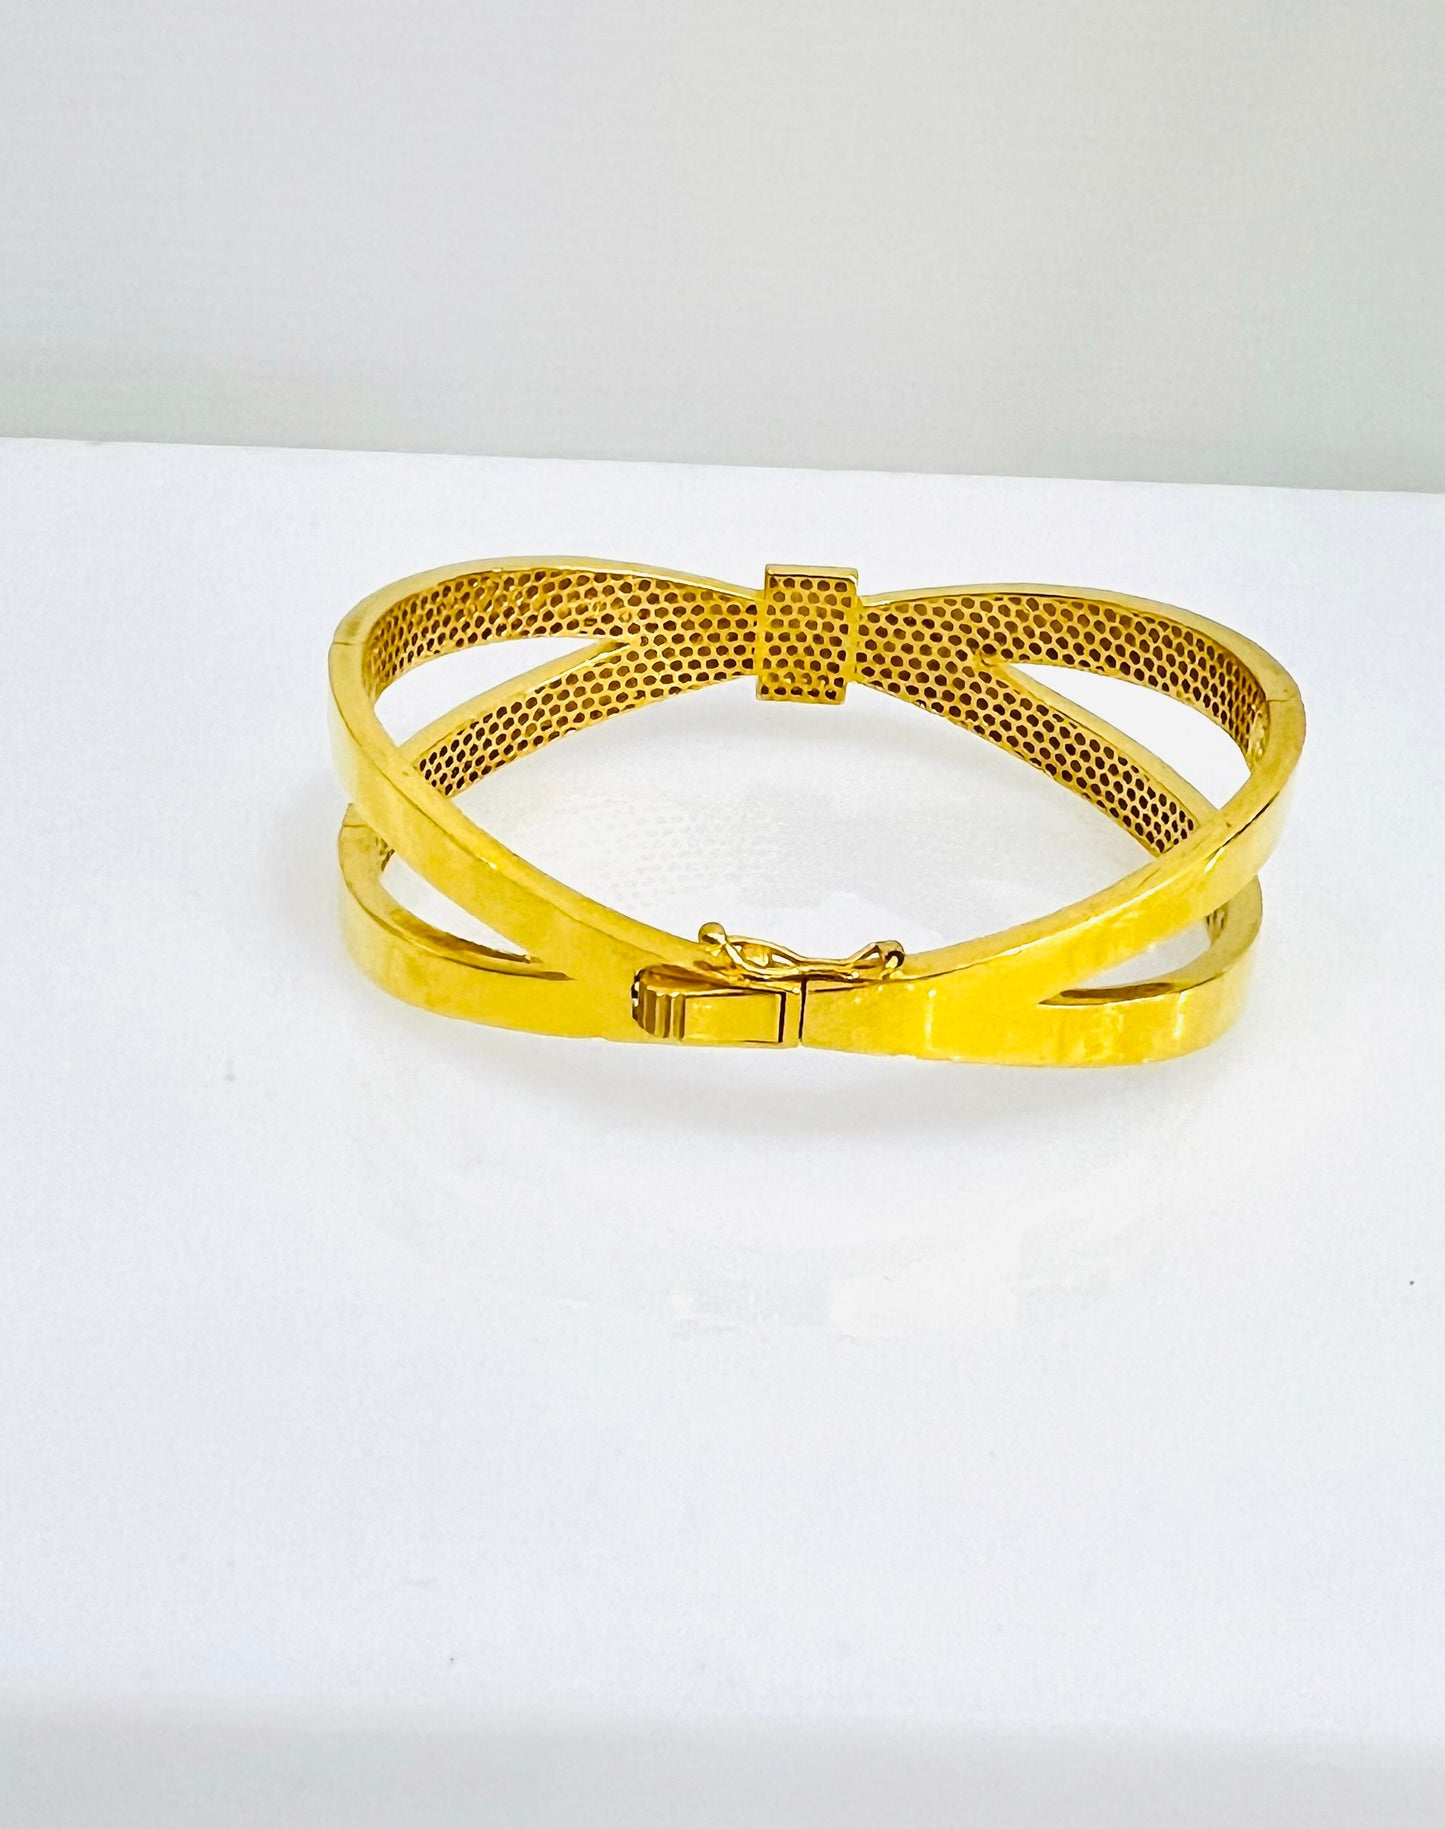 21k Gold X Design Bangle Bracelet